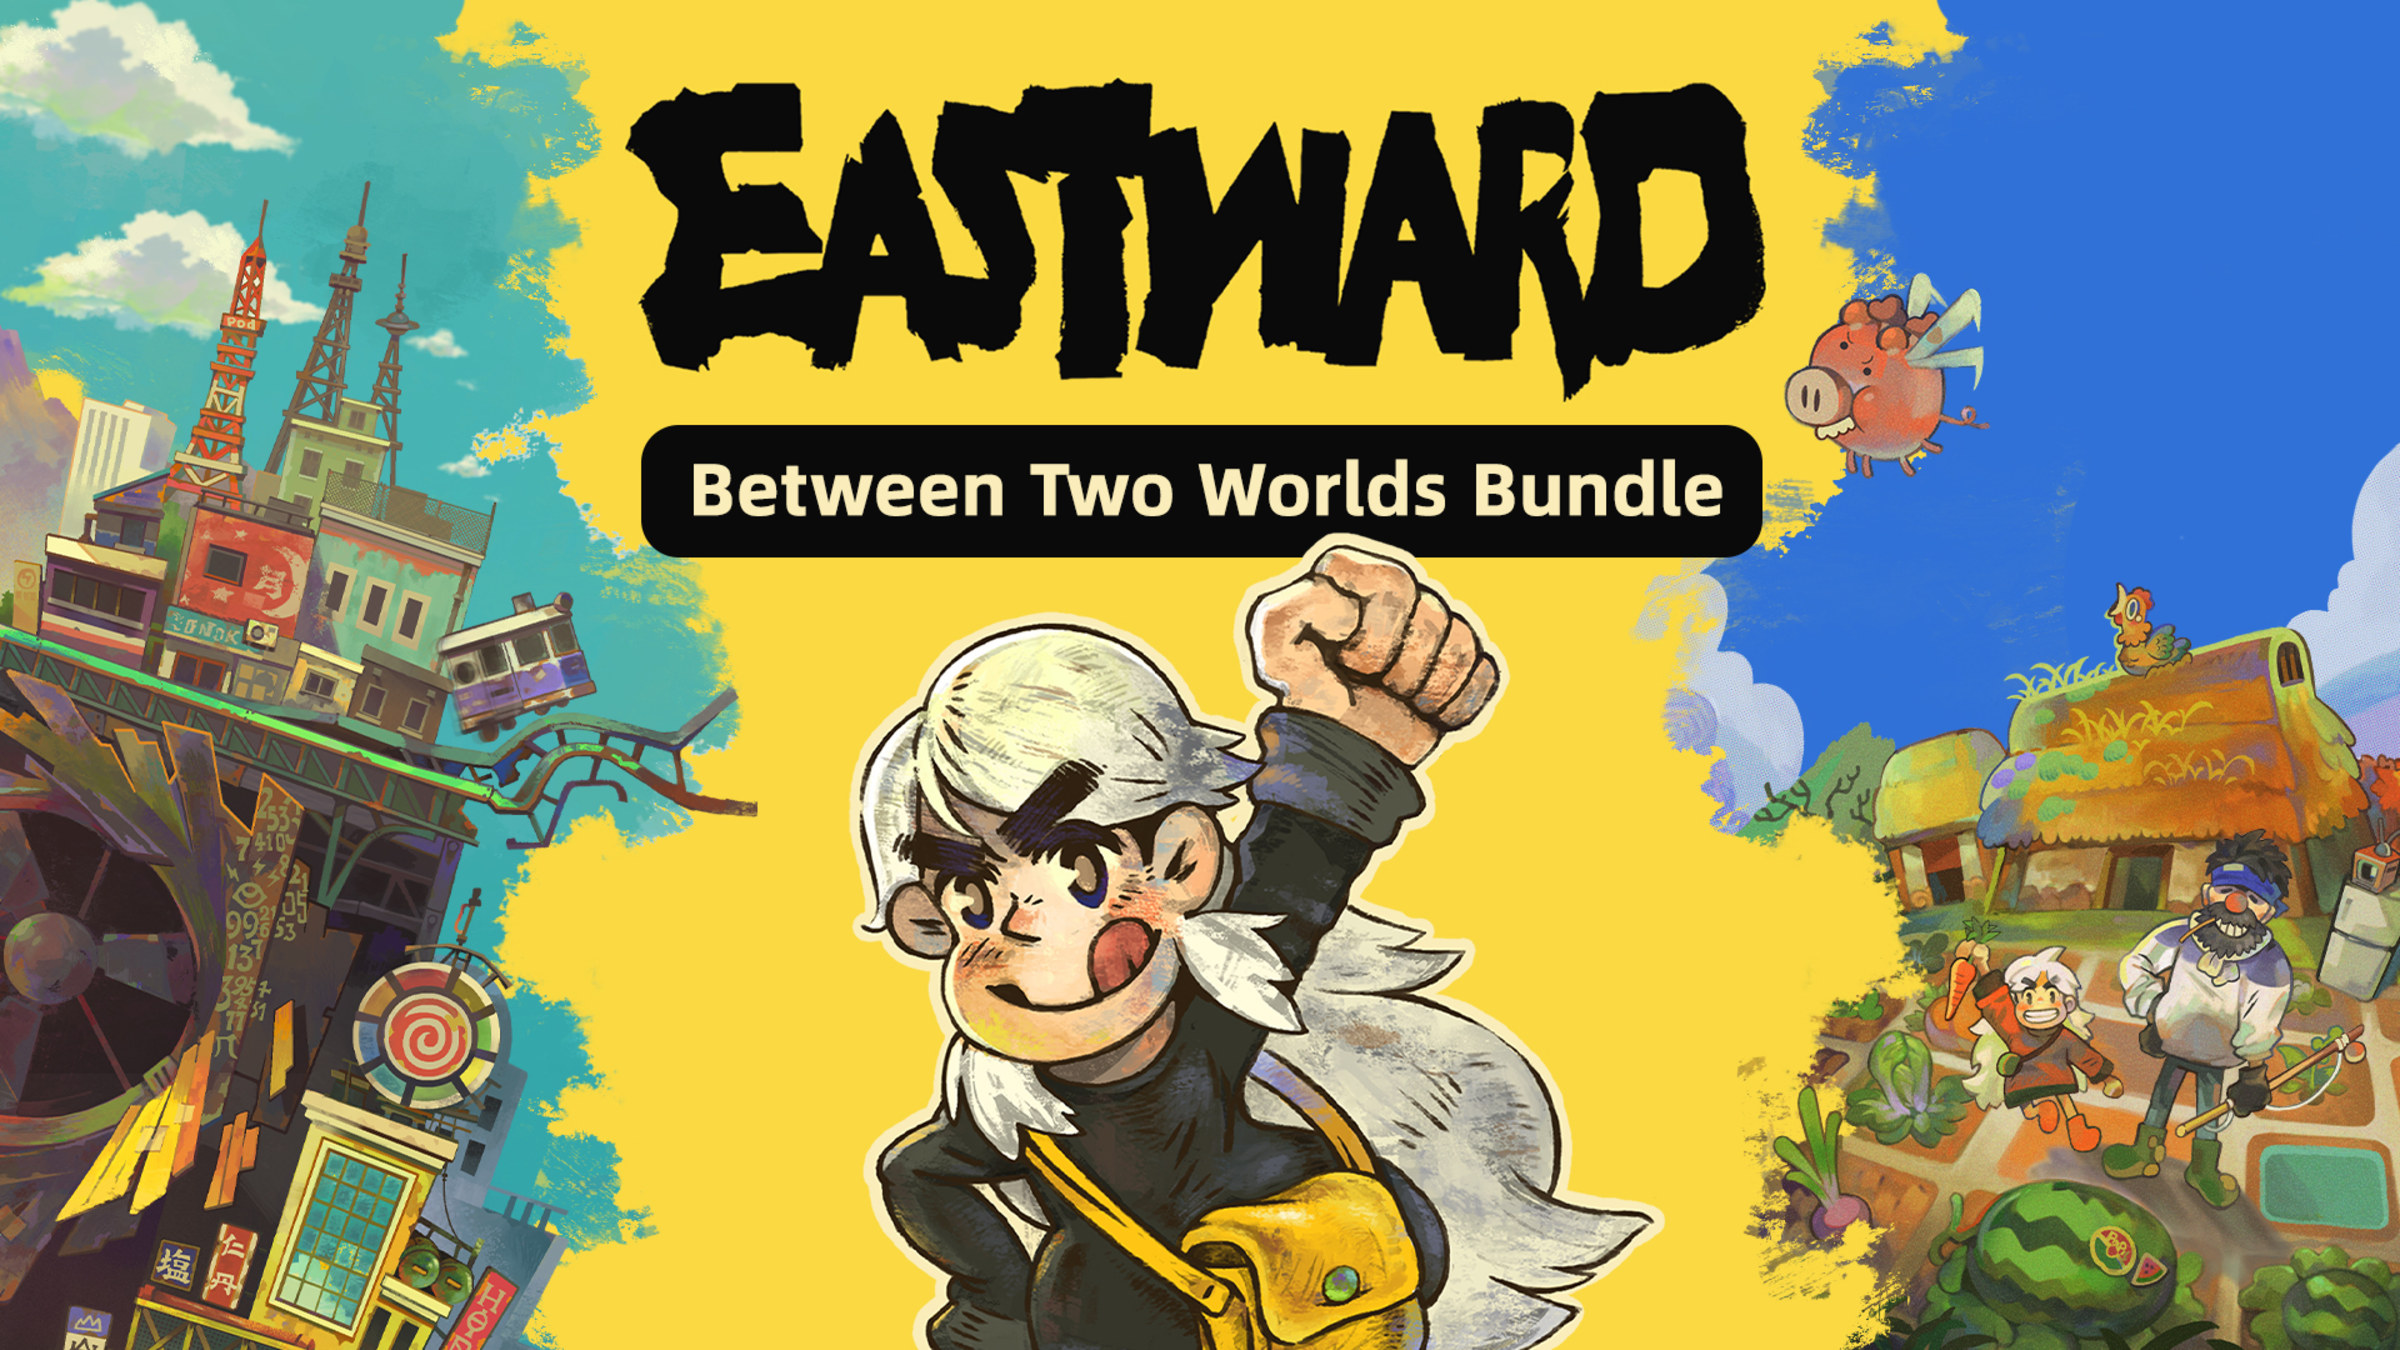 Eastward - Between Two Worlds Bundle for Nintendo Switch - Nintendo  Official Site